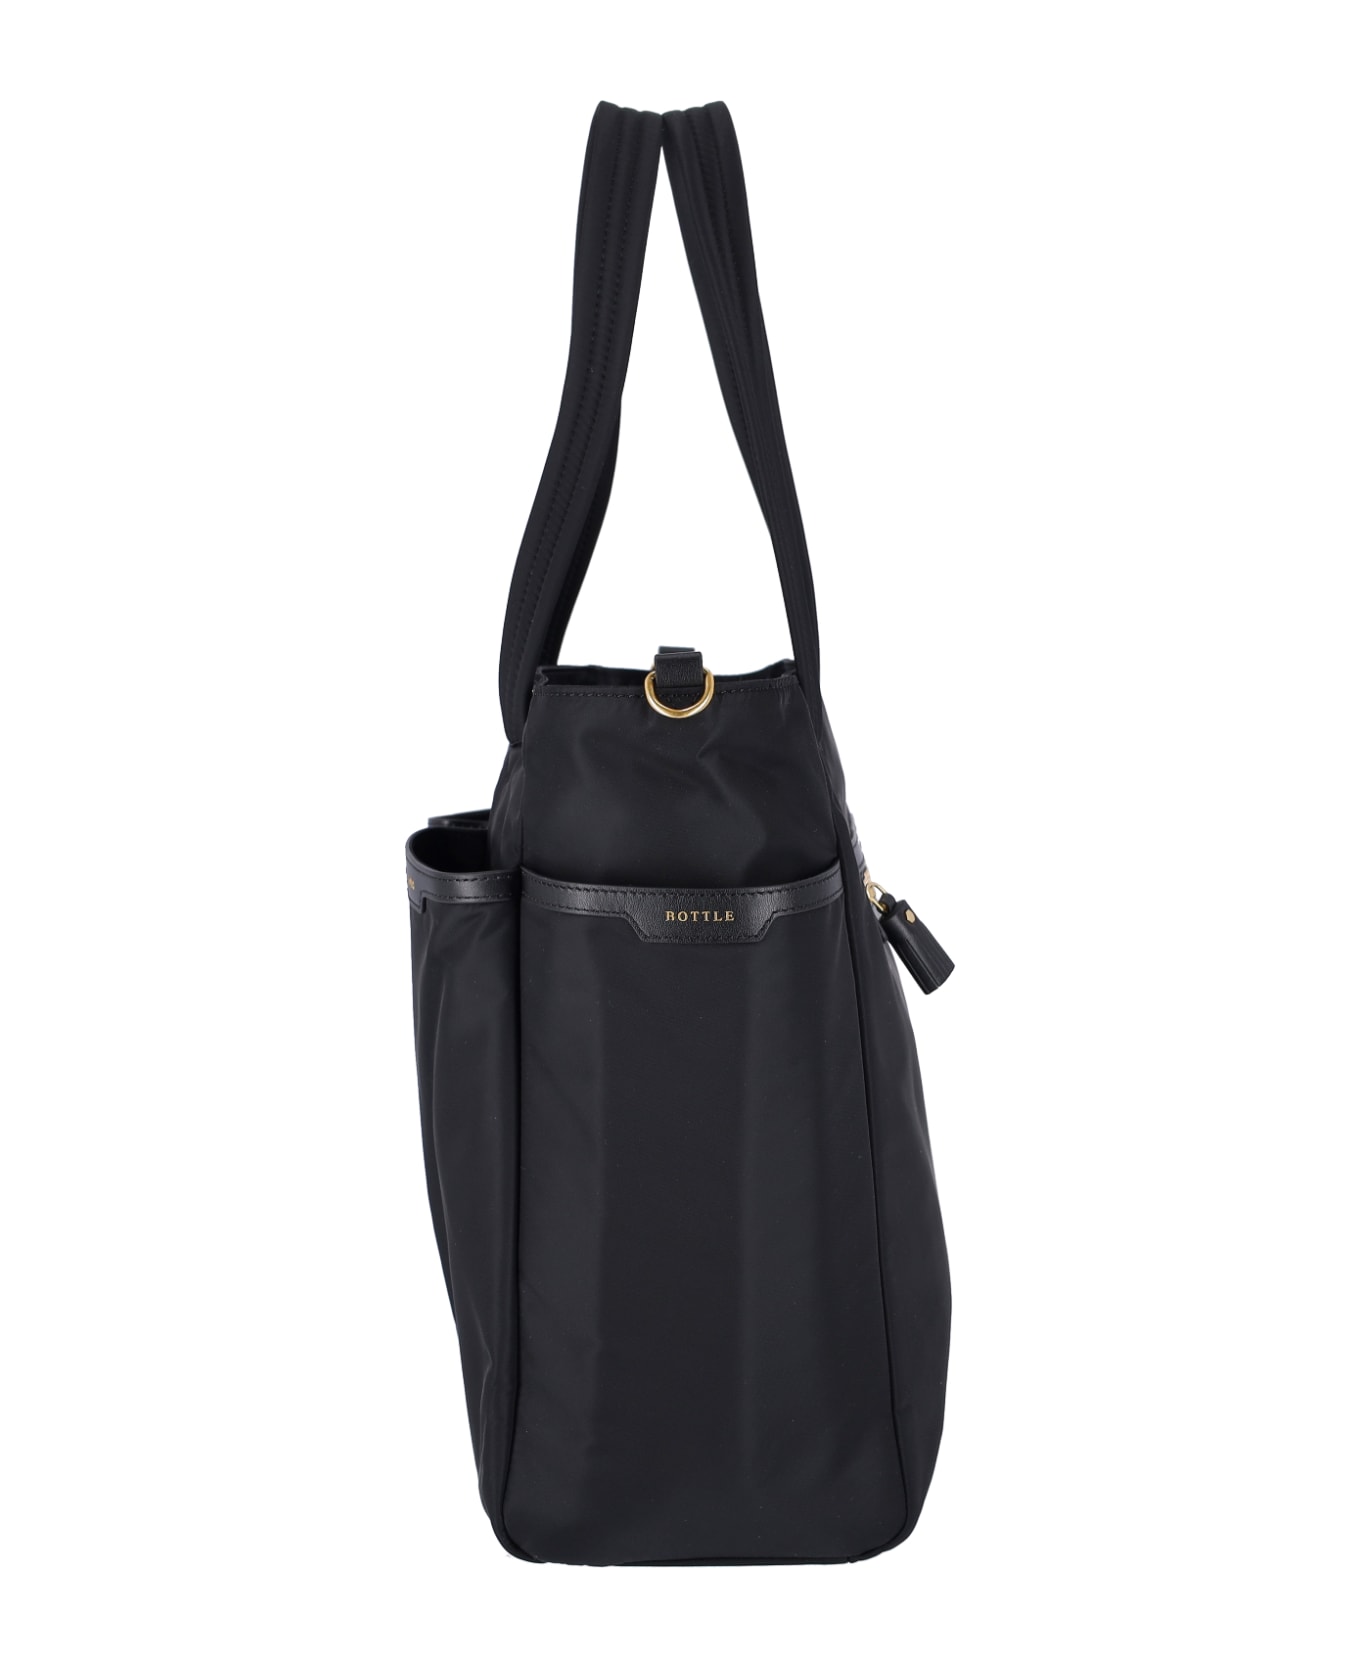 Anya Hindmarch Tote Bag 'multi-pocket' - Black  